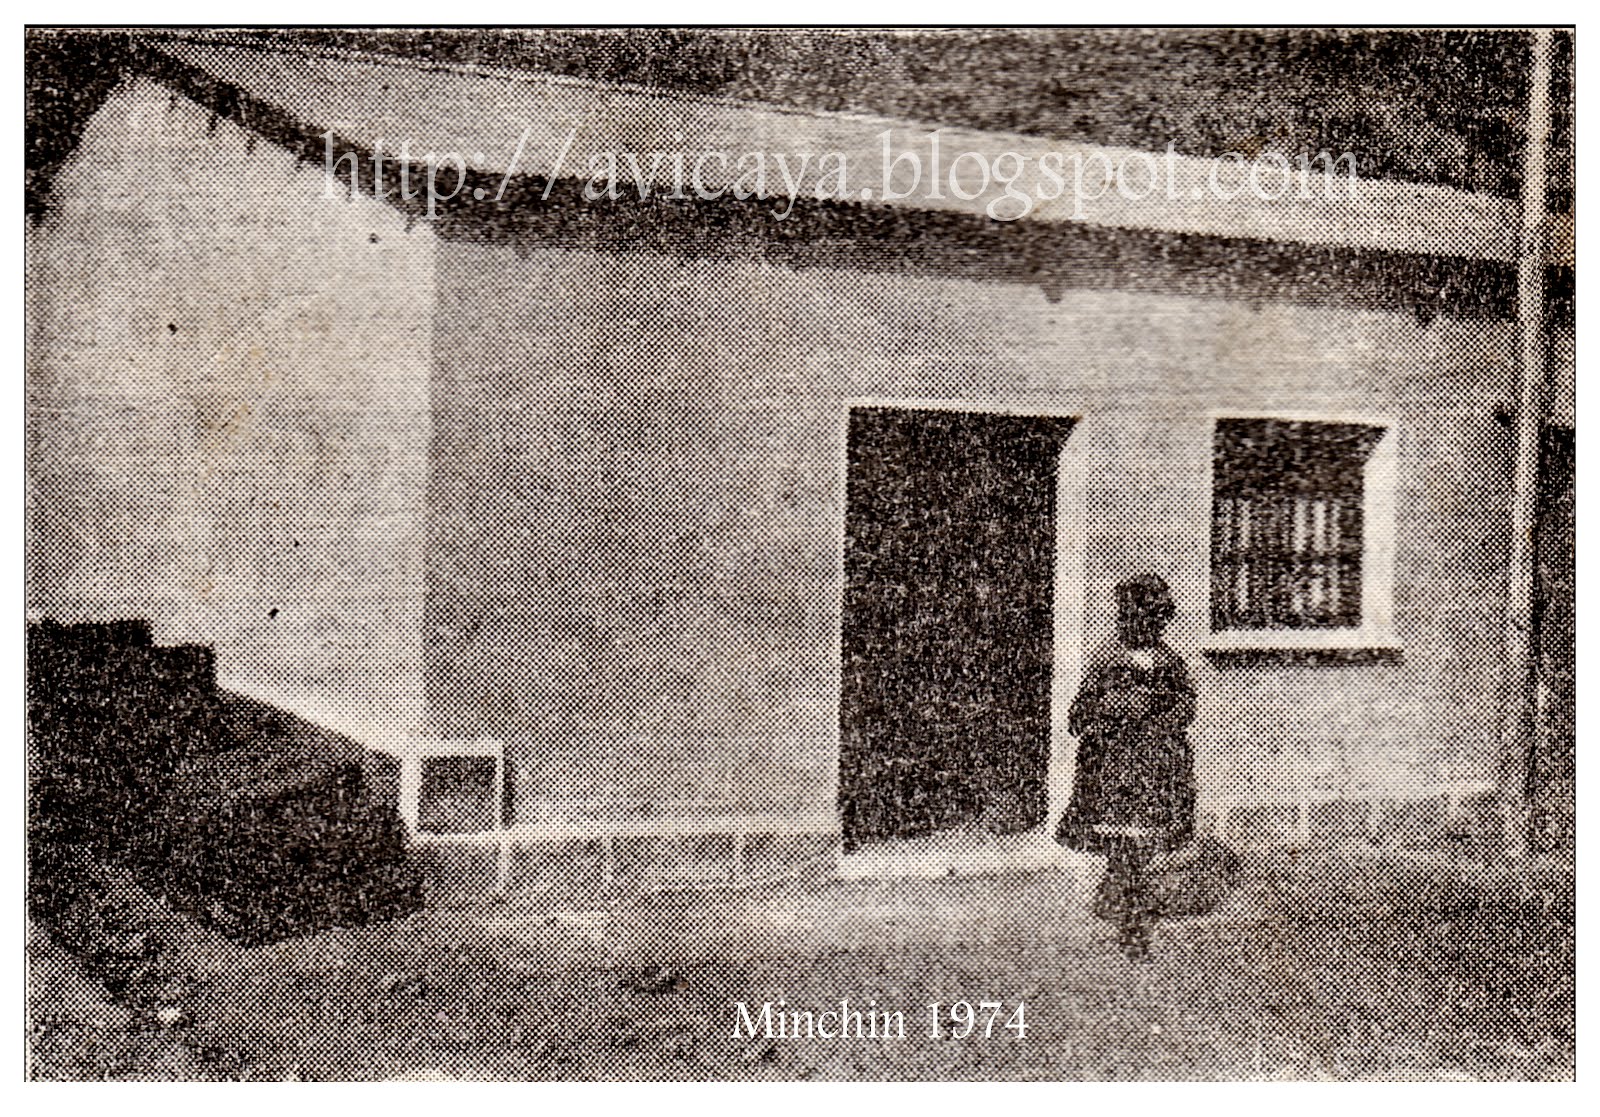 Minchin 1974